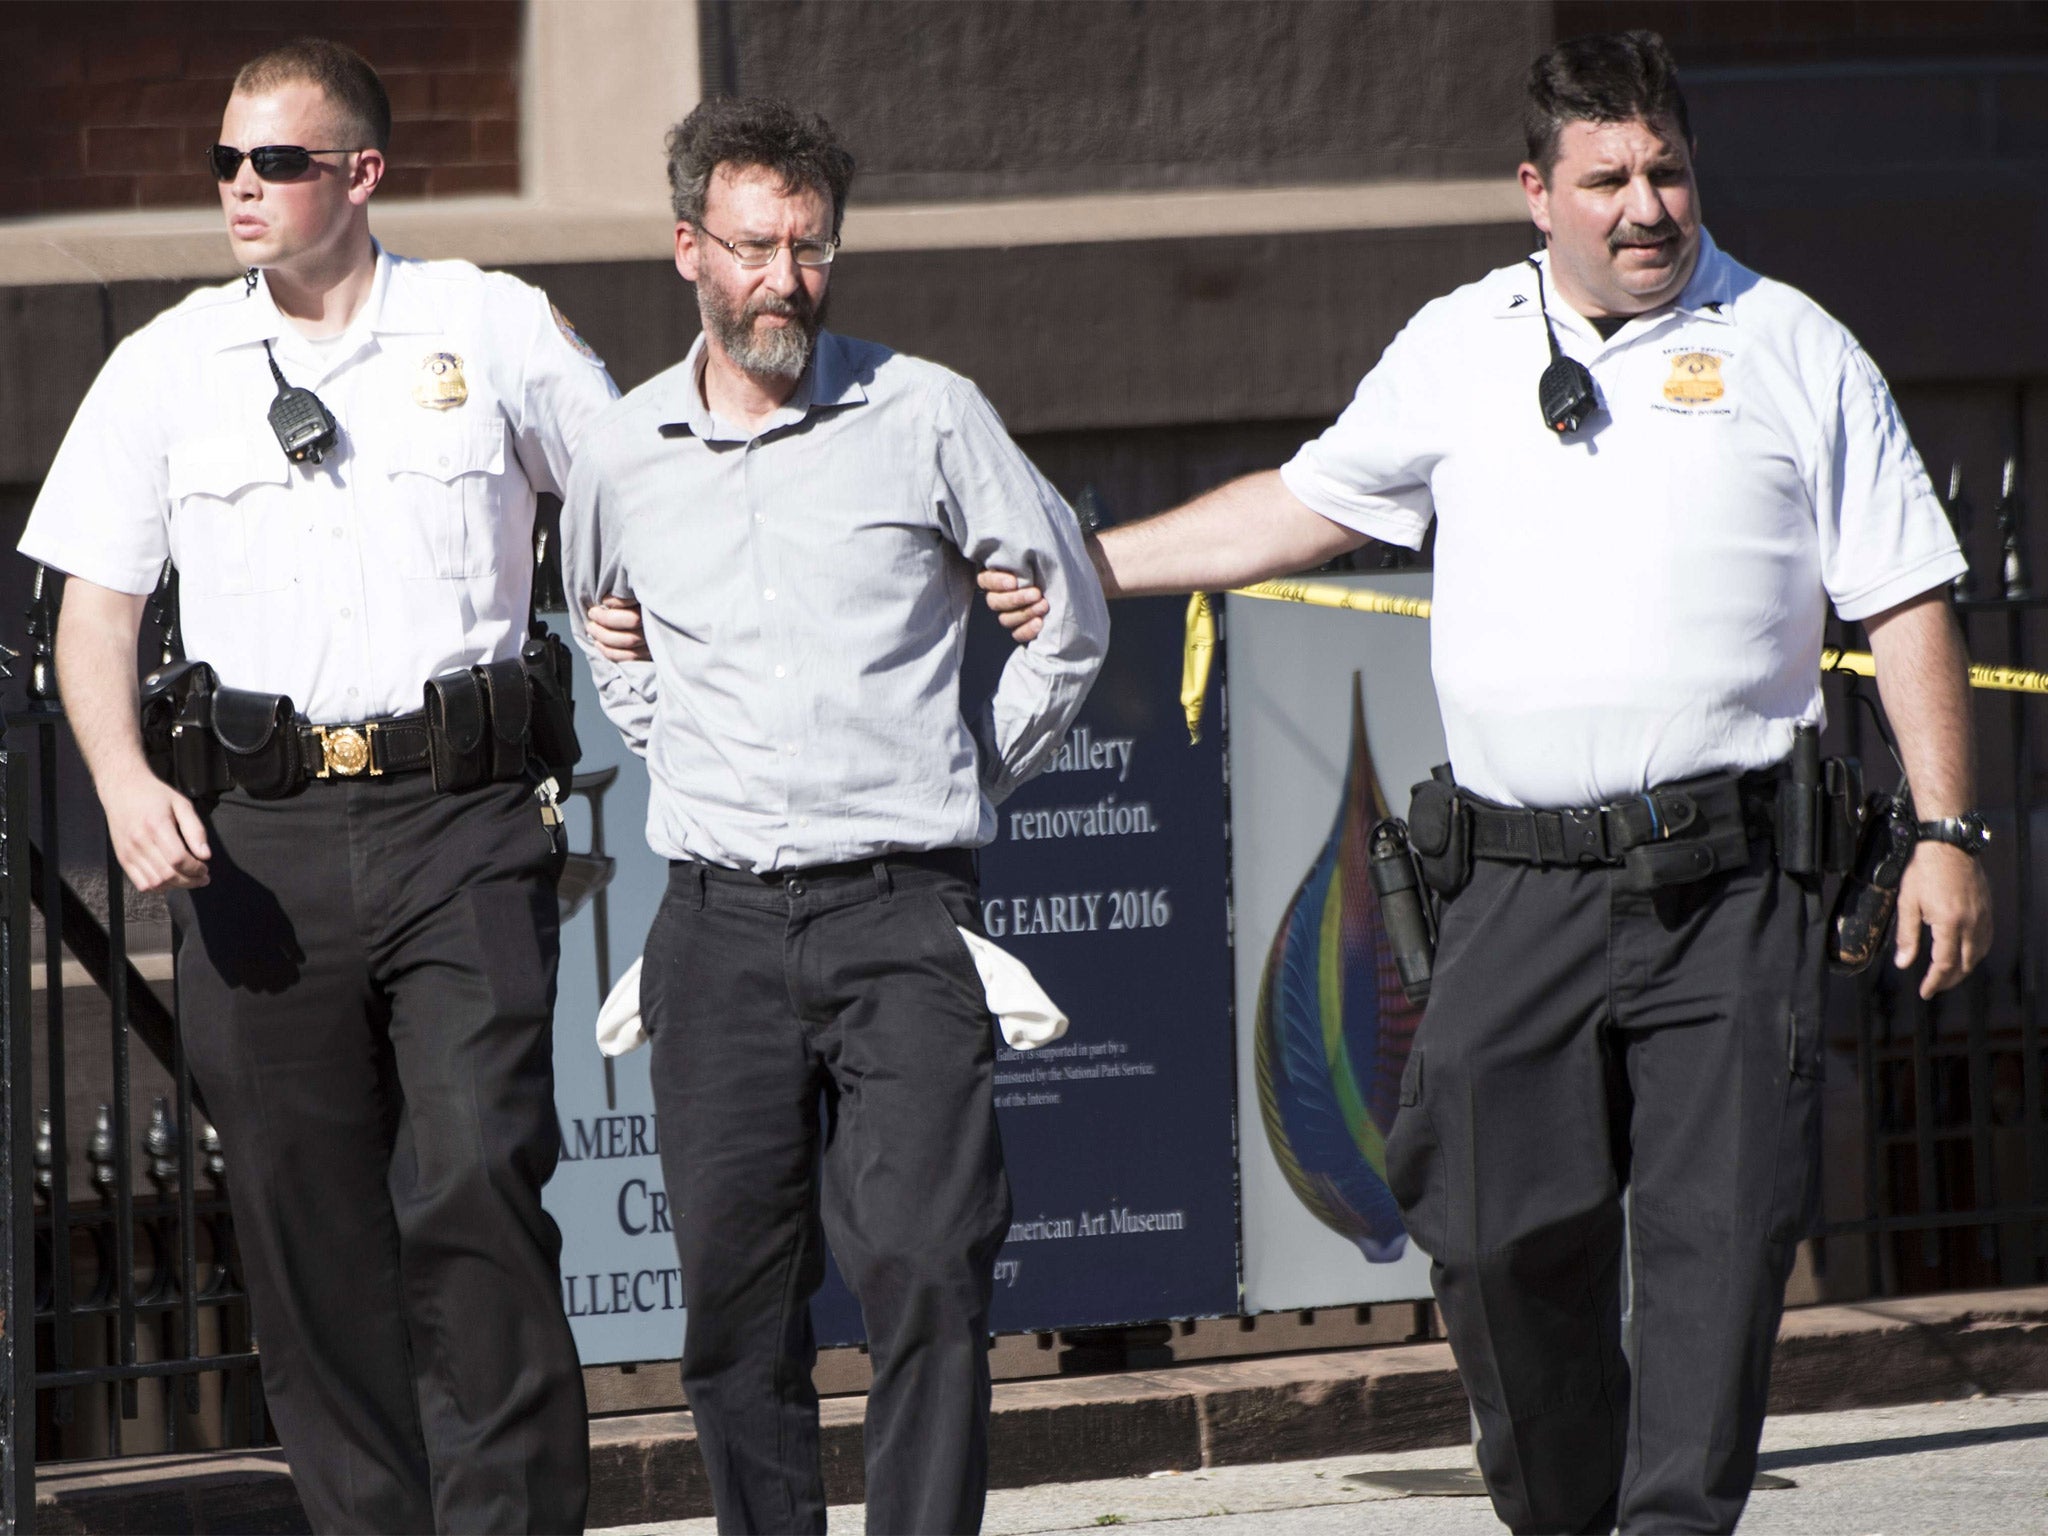 A man is taken into custody by Secret Service officials